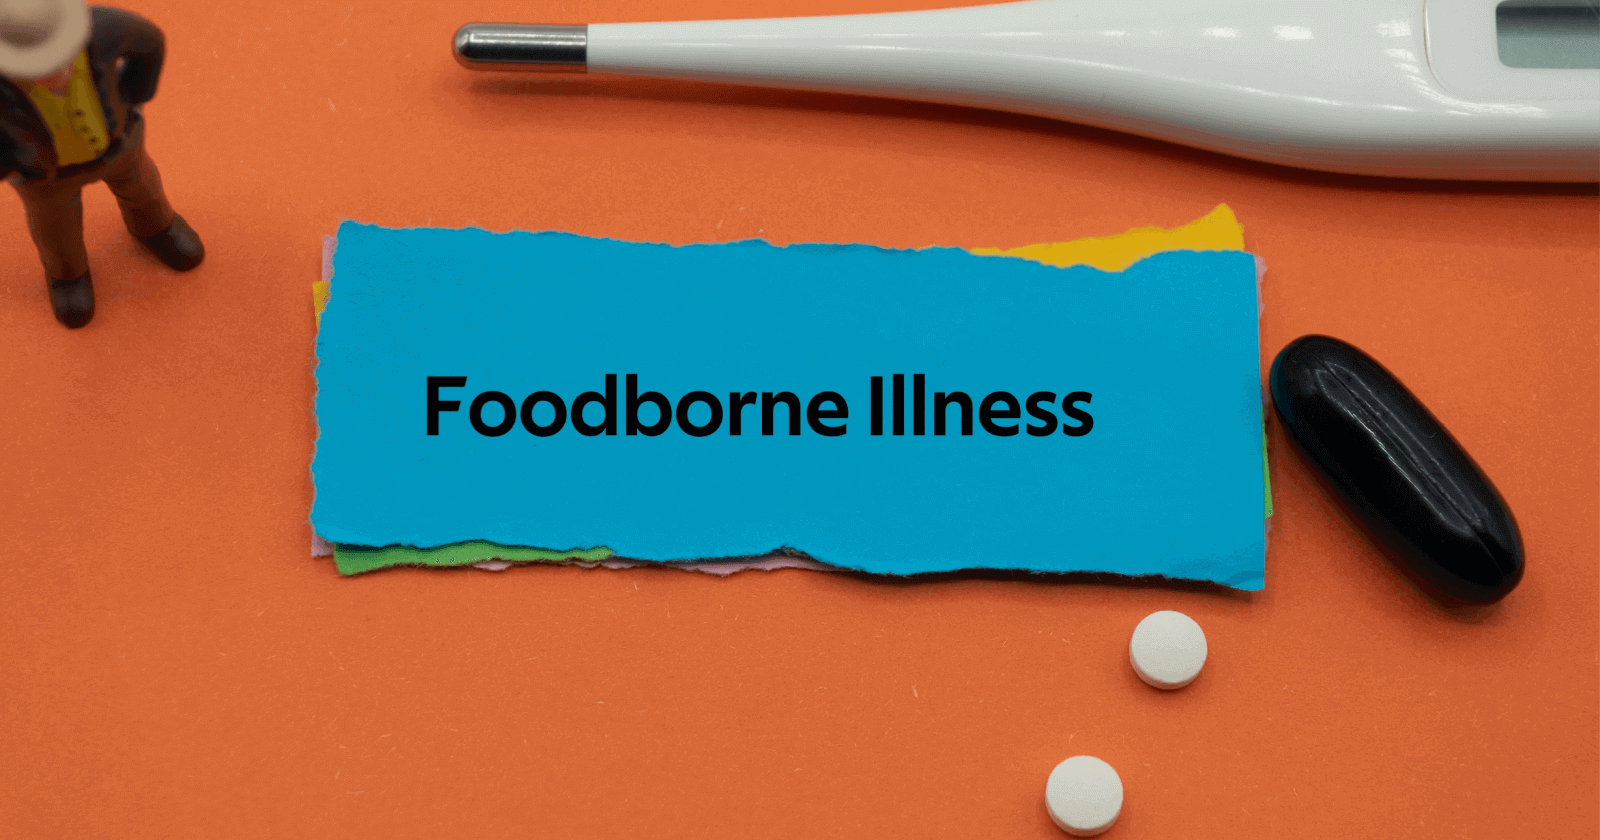 First Aid Guide: Foodborne illness